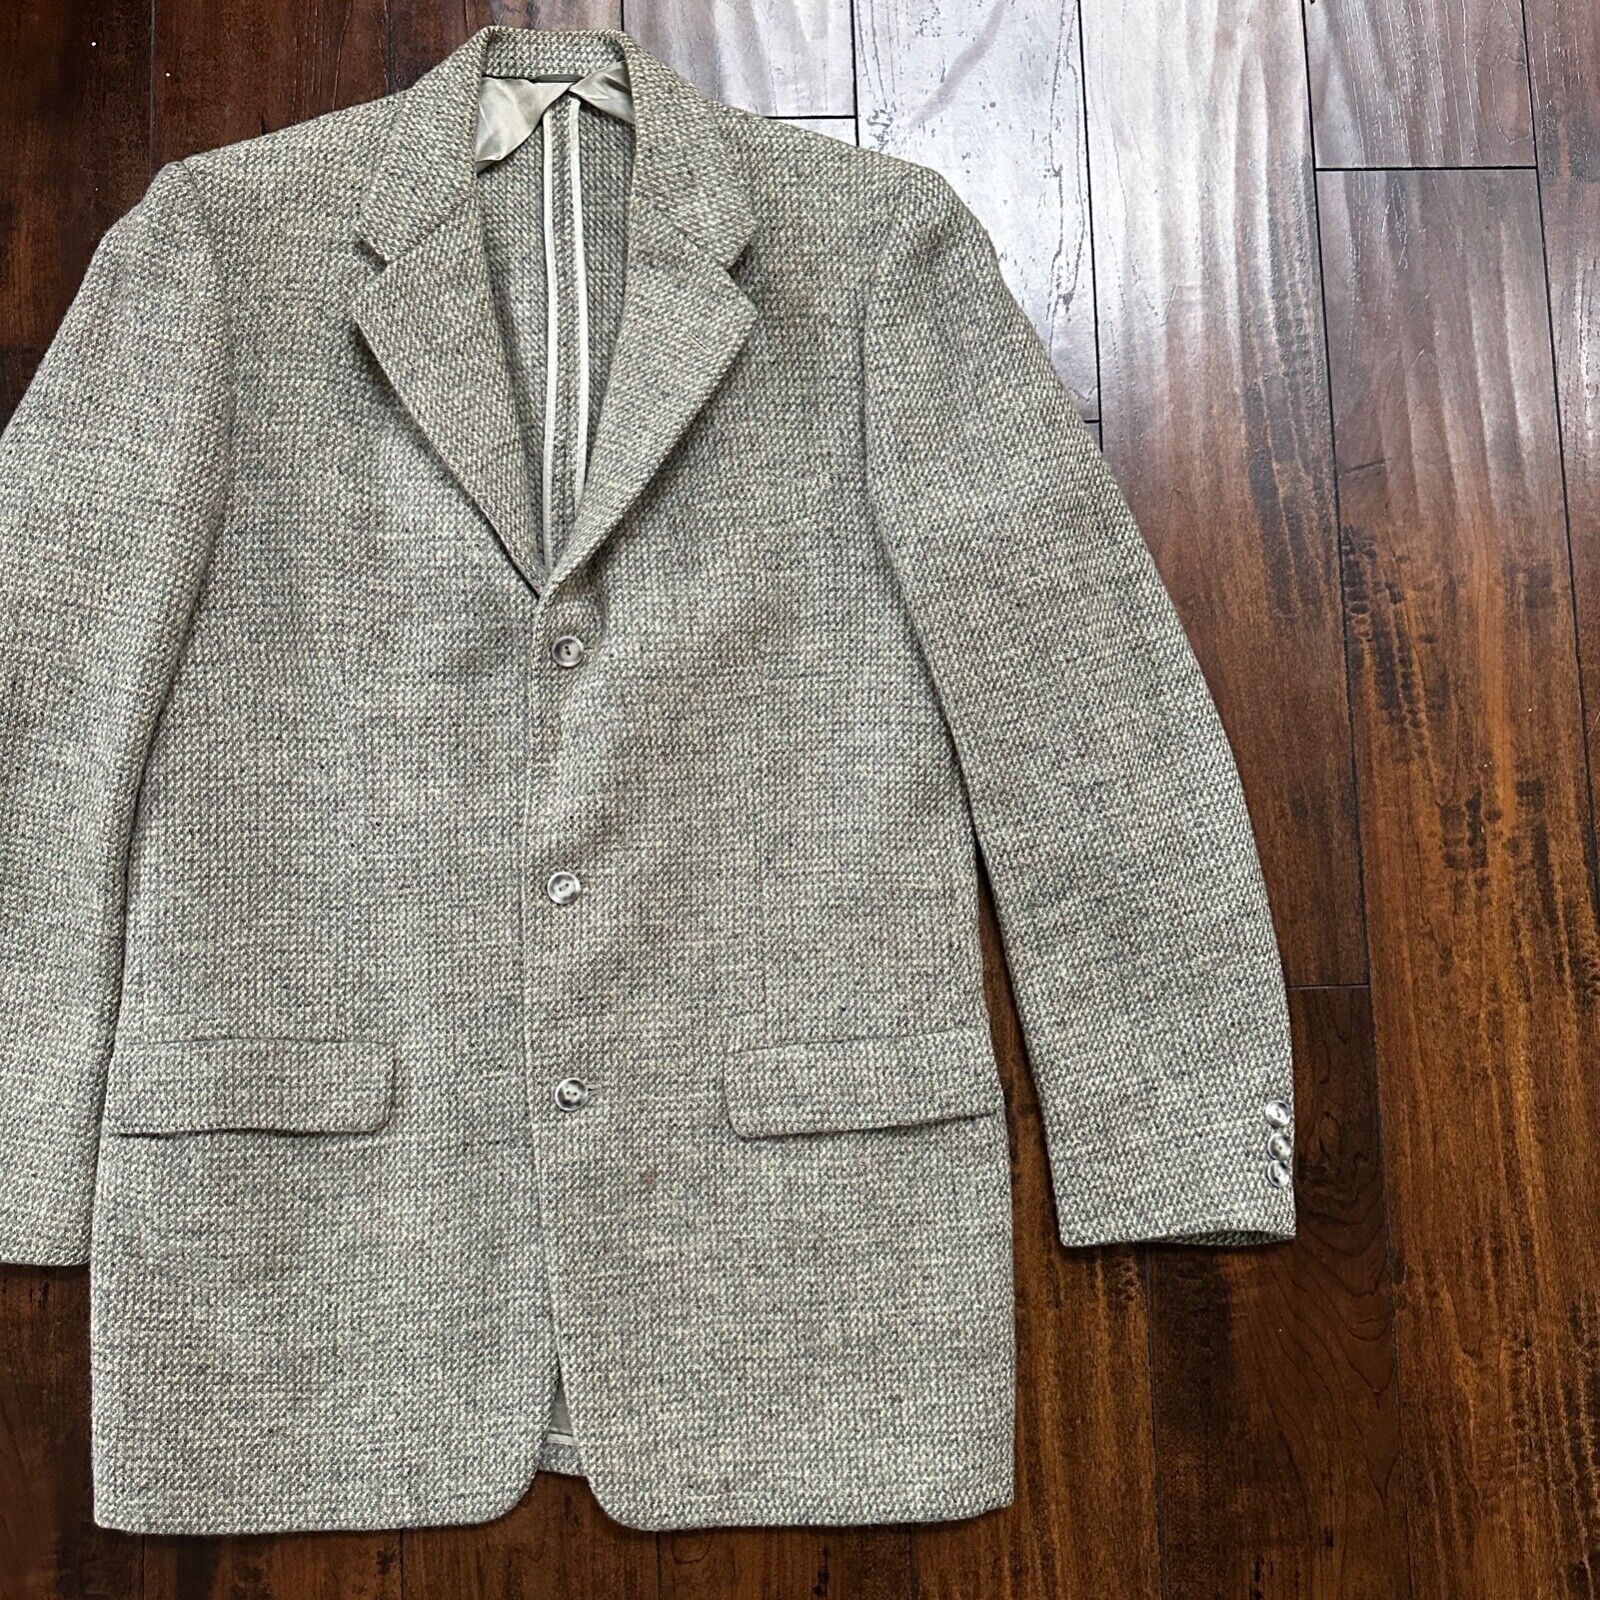 Vintage 1960s Robert Hall Smoke Grey Tweed Shaggy Flecked Blazer Jacket 60s